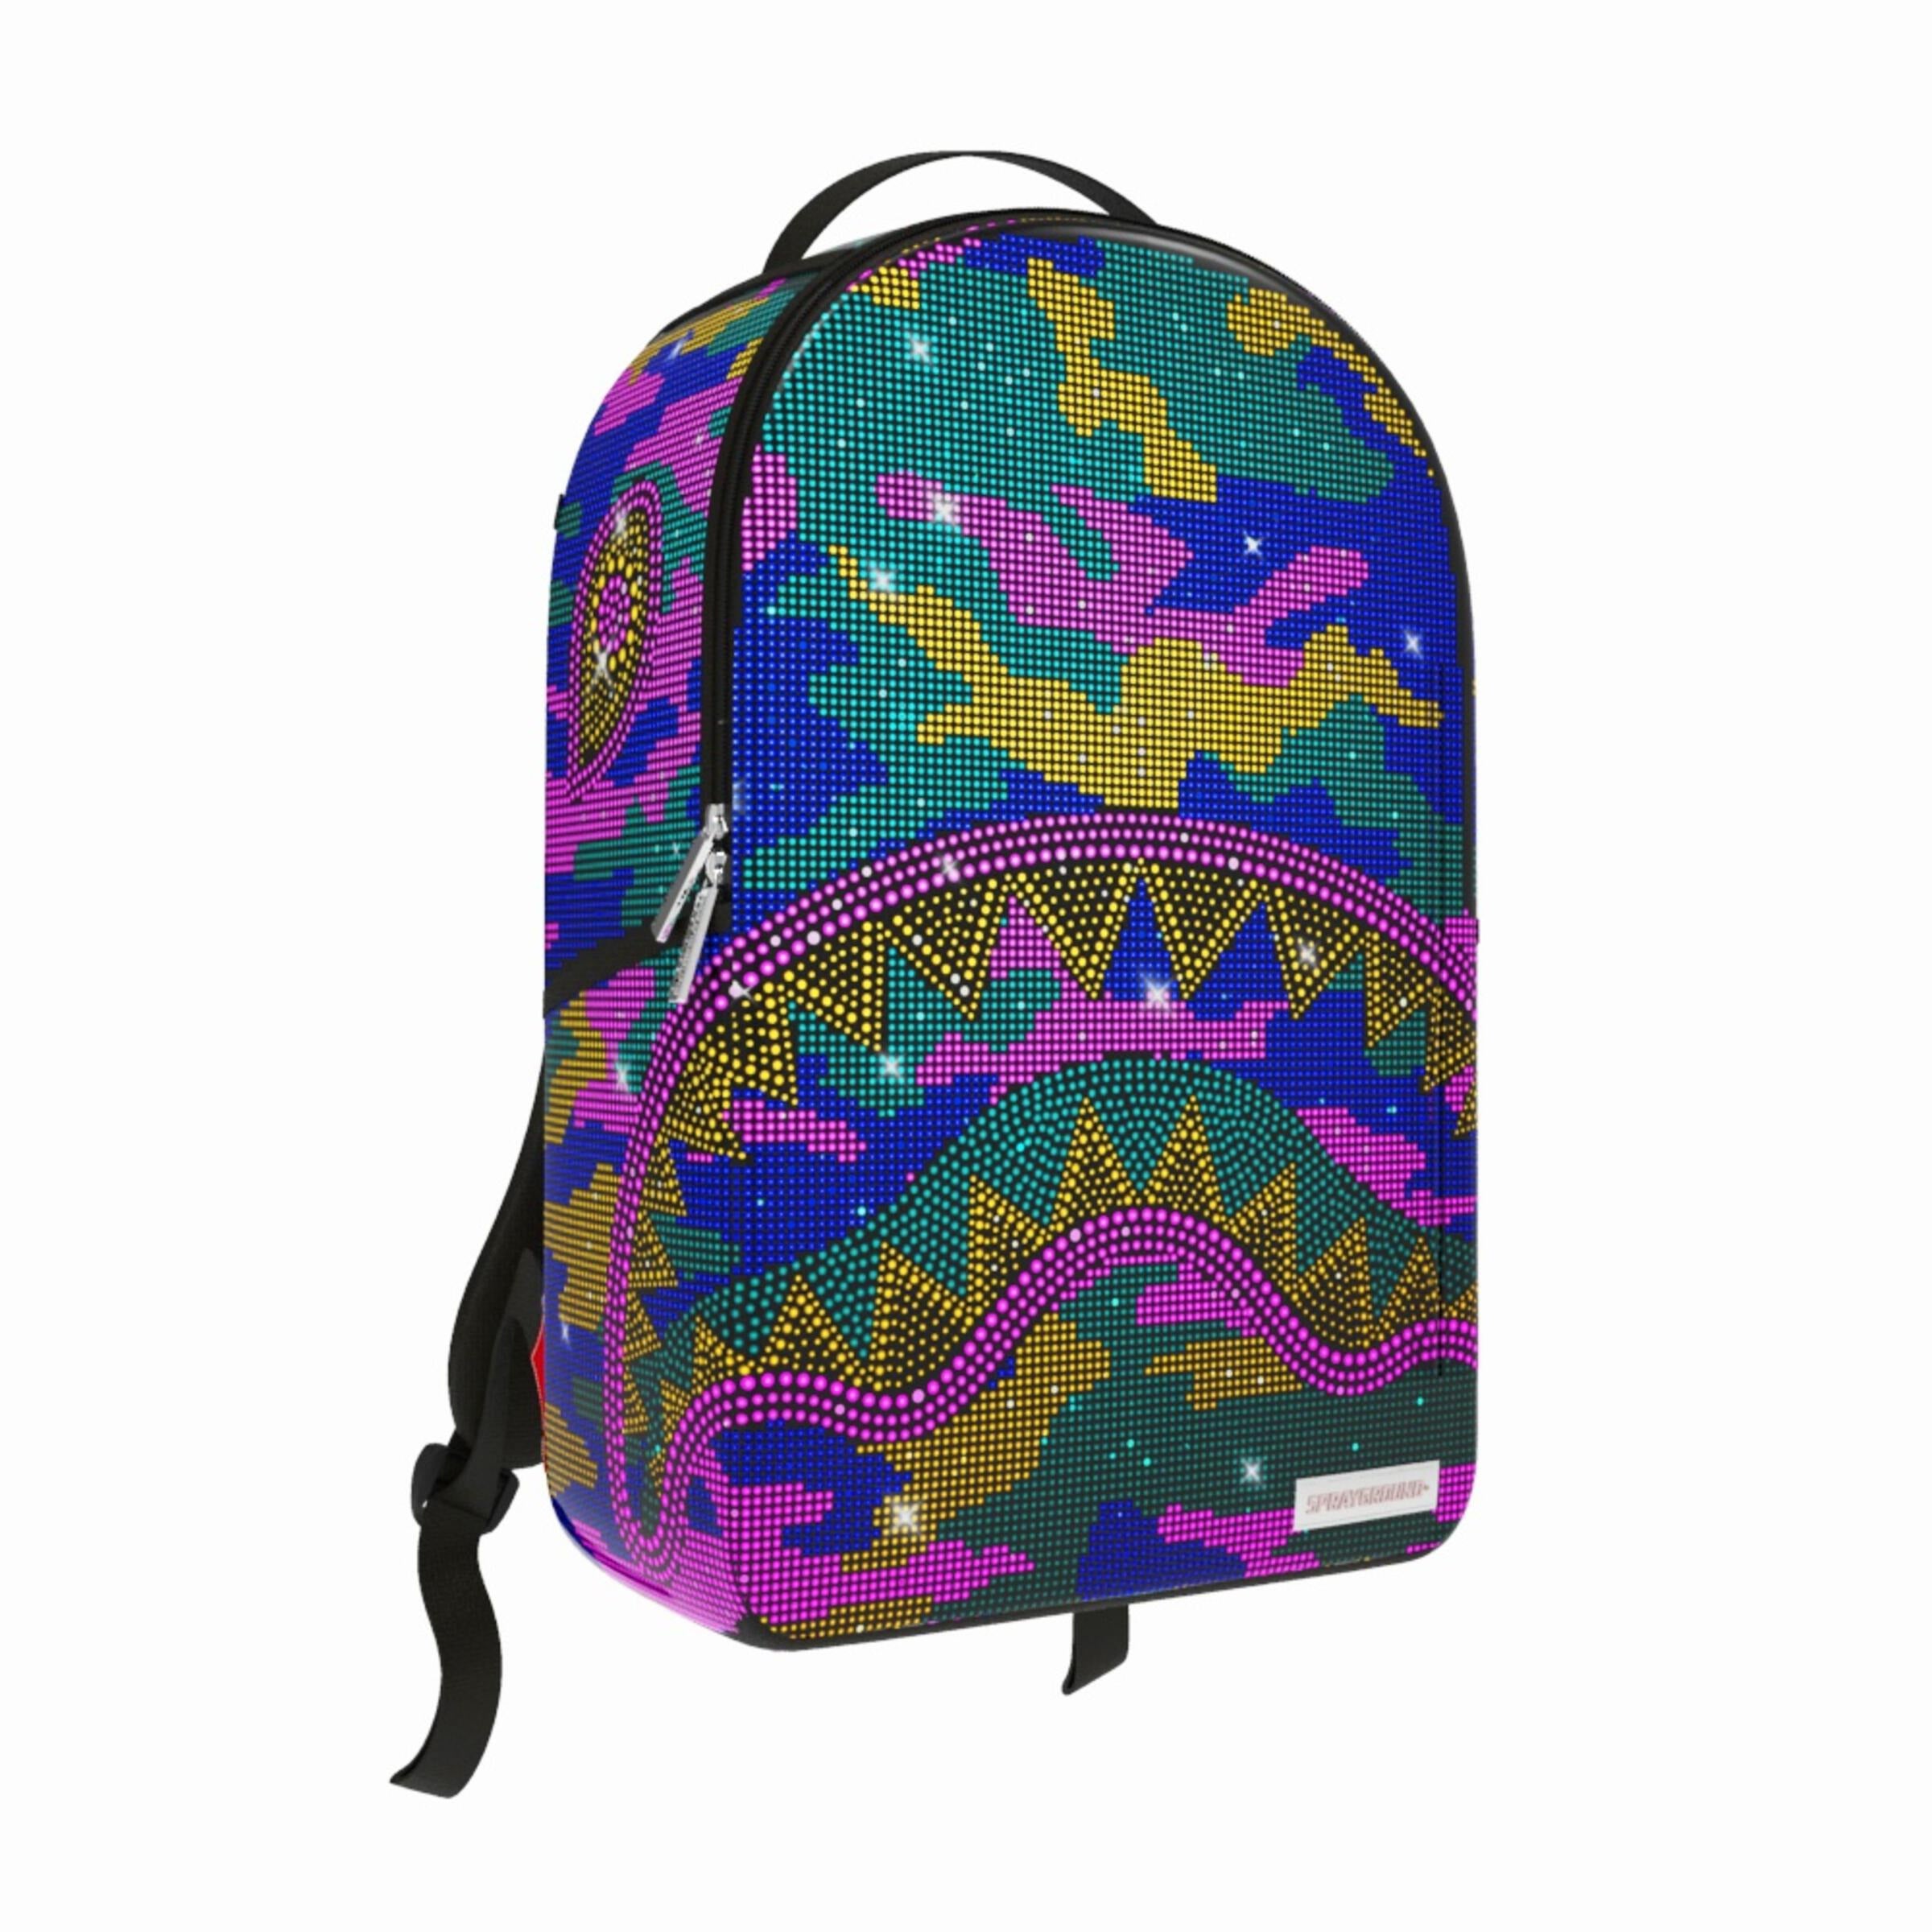 Sprayground Tiff Galaxy Shark Backpack